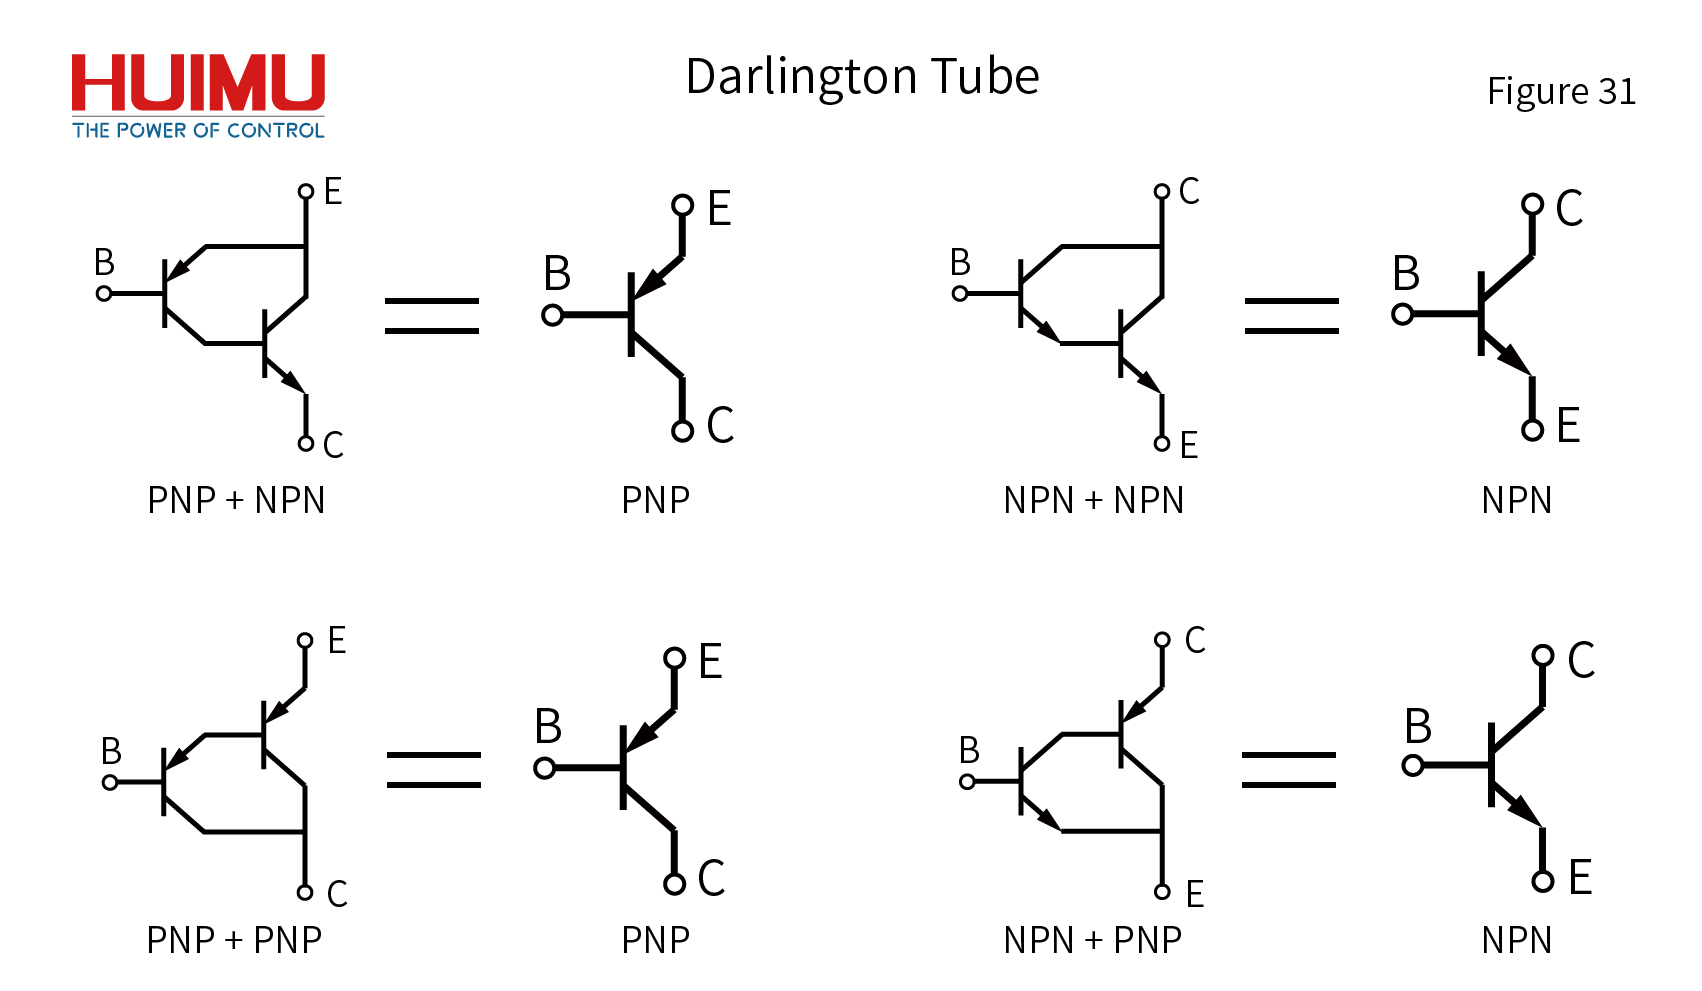 Darlington tube